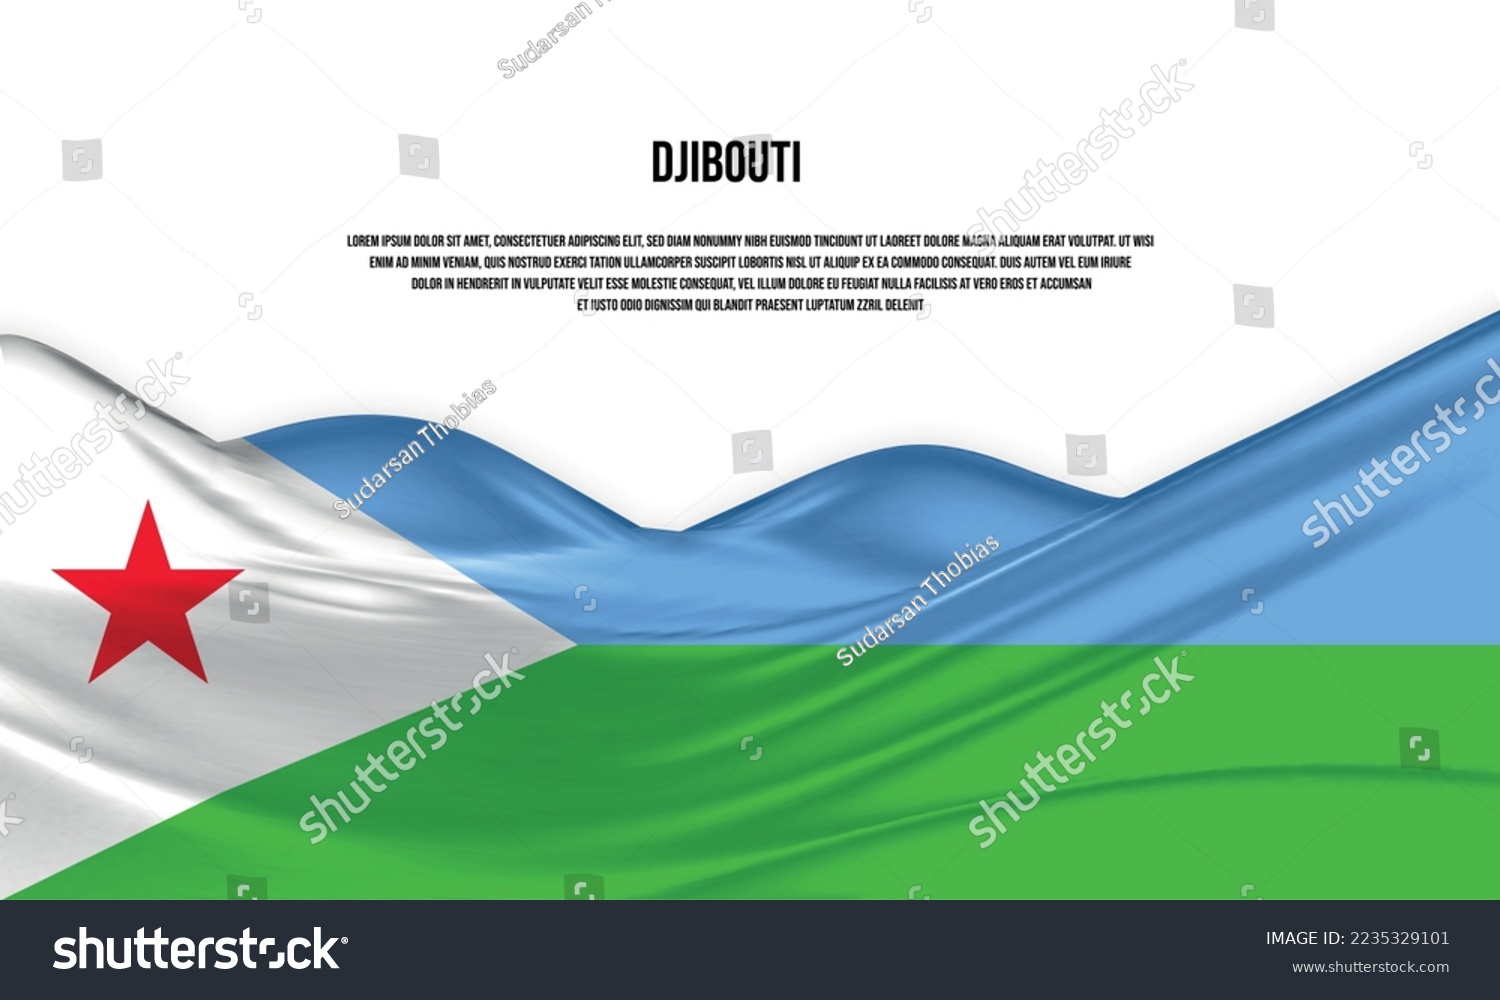 SVG of Djibouti flag design. Waving Djibouti flag made of satin or silk fabric. Vector Illustration. svg